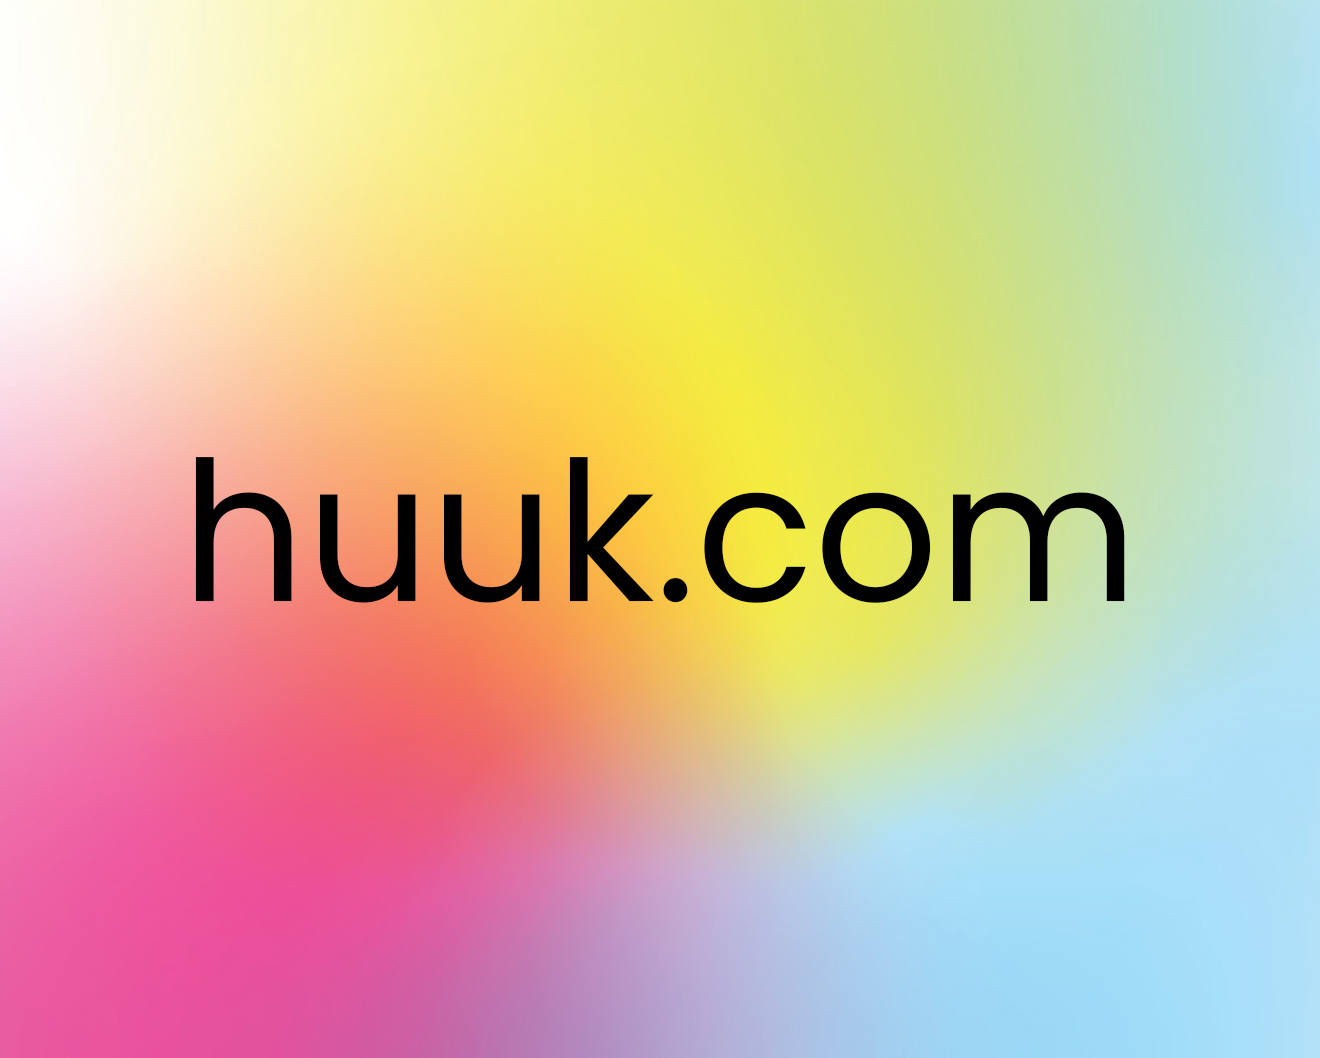 huuk.com domain selling.jpg